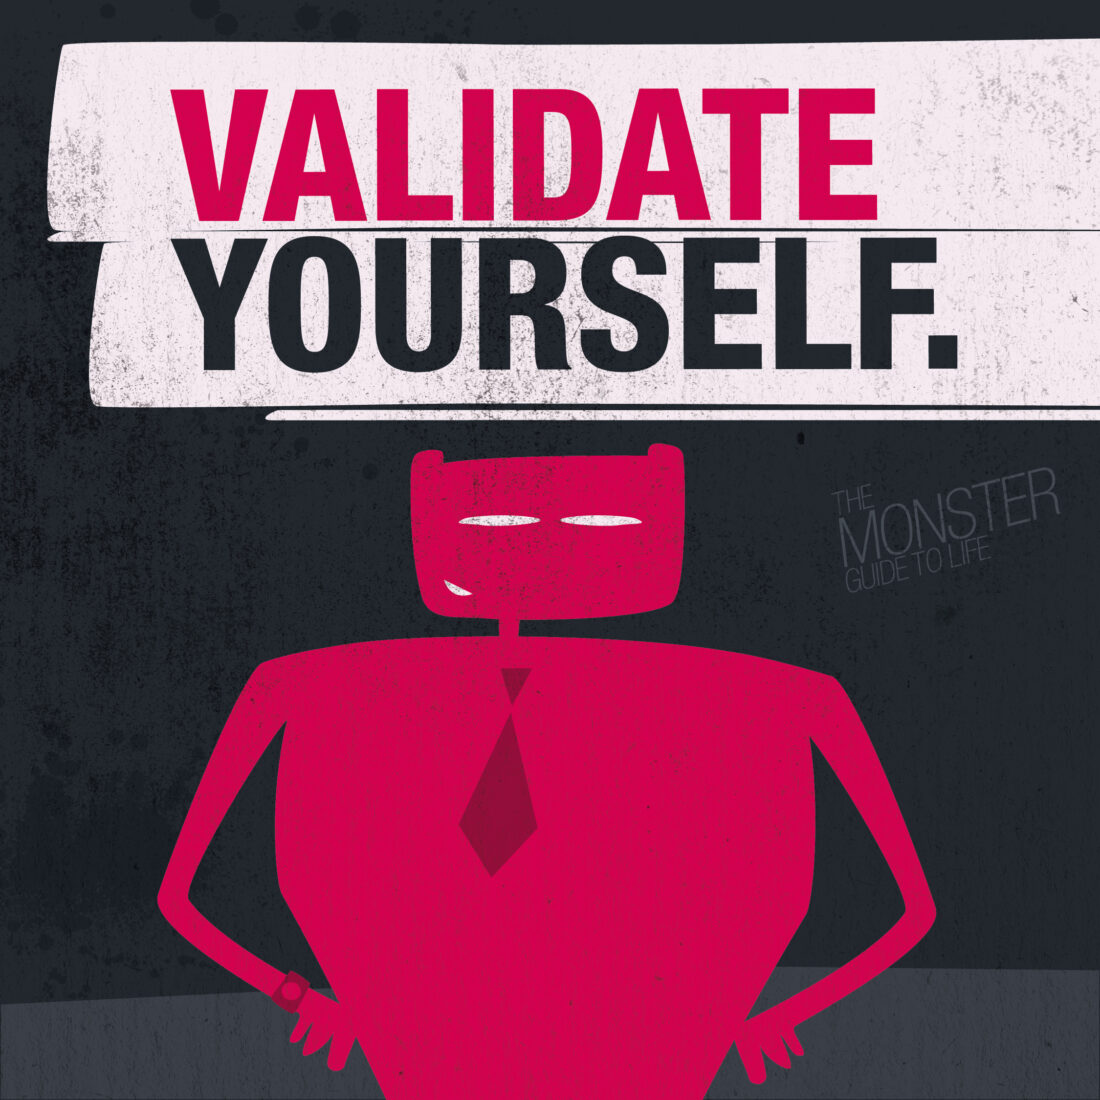 Validate yourself